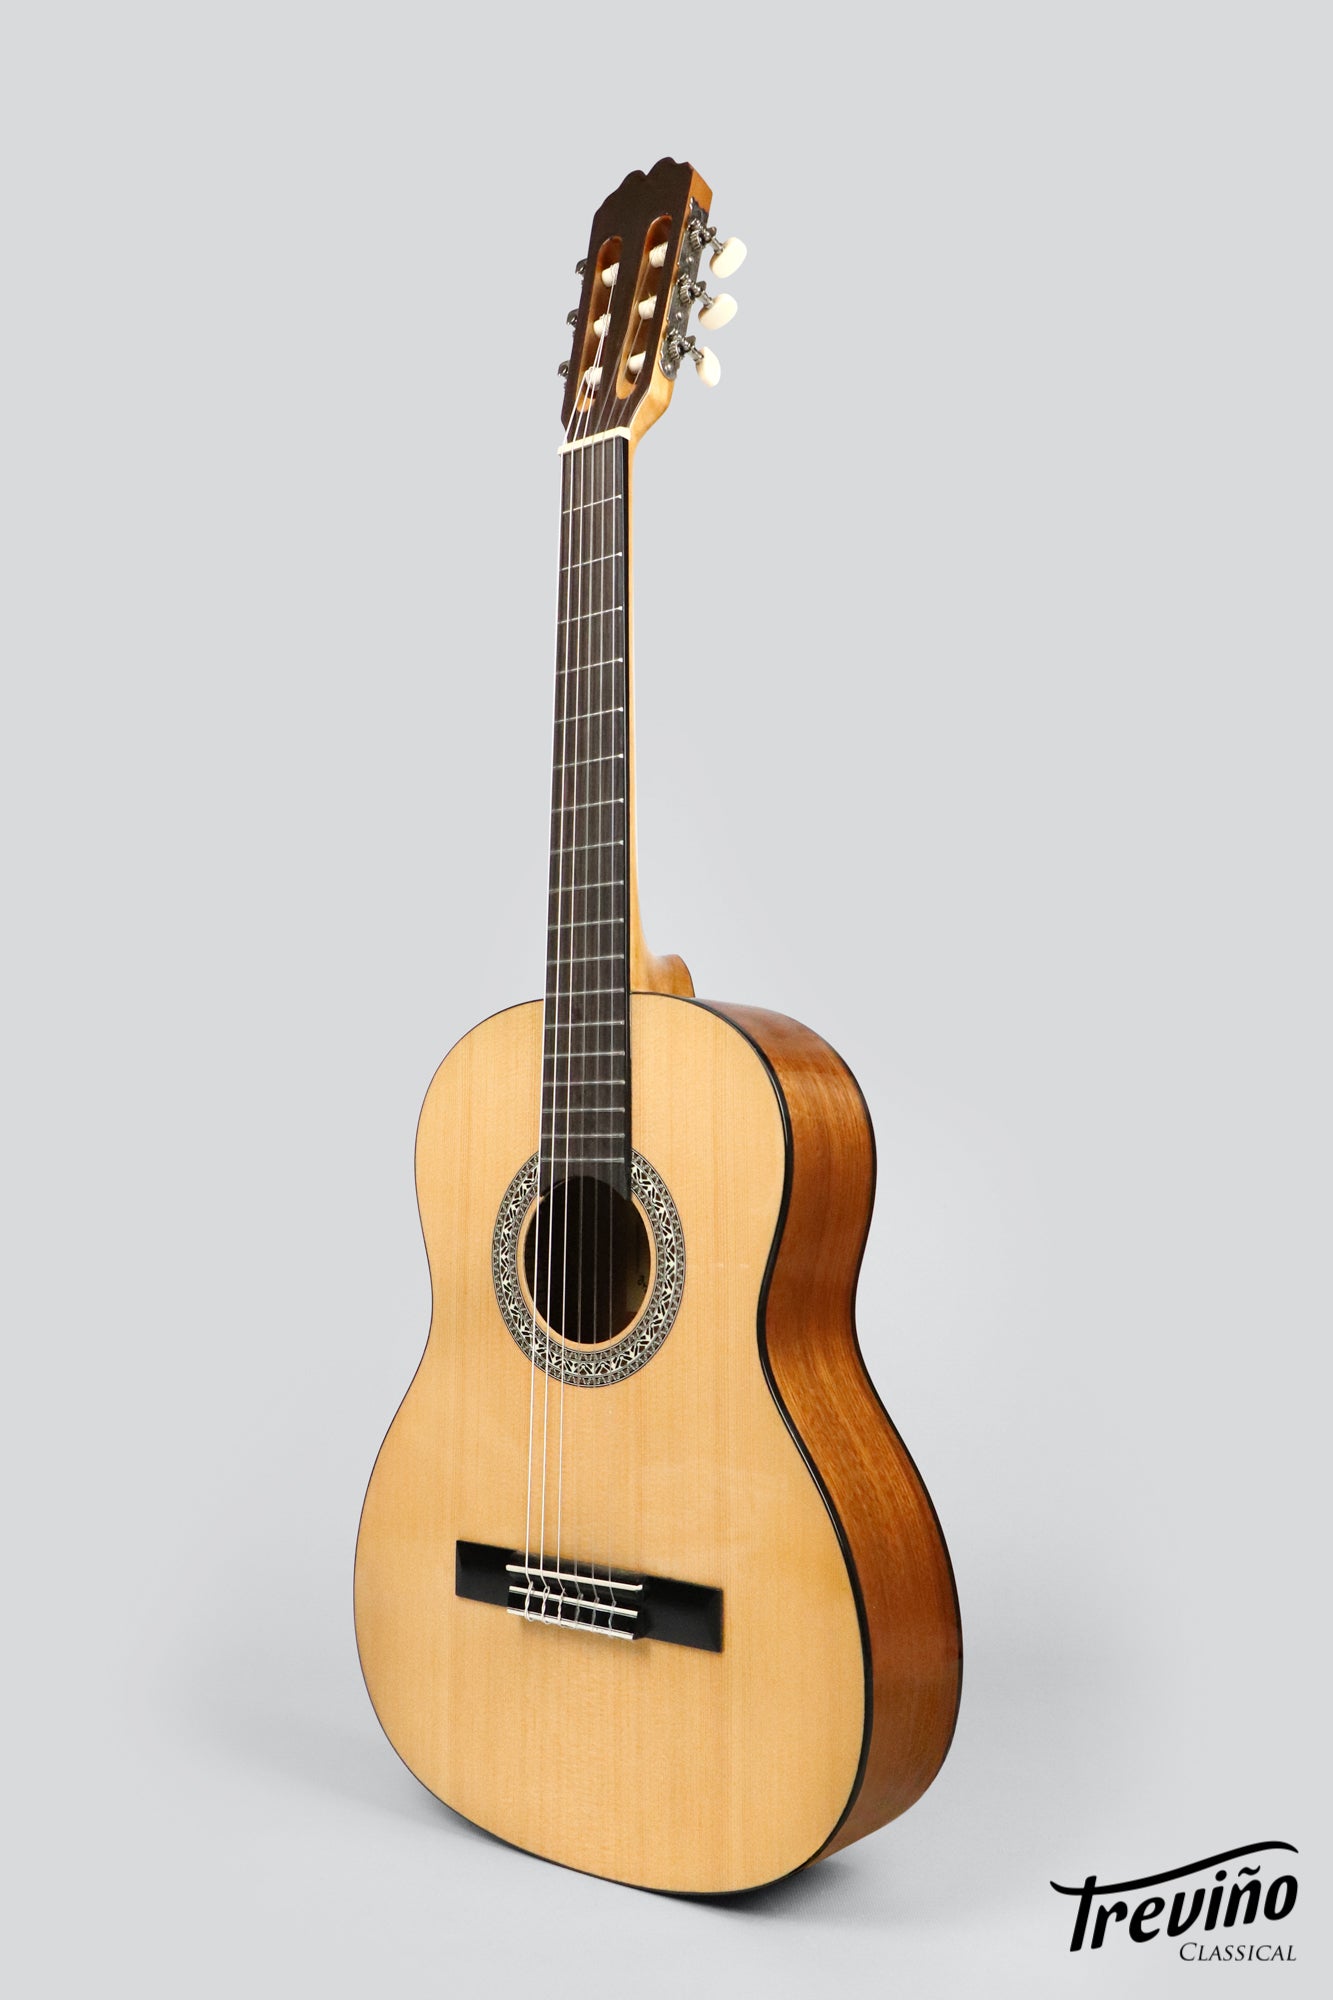 Trevino C393-55 Classical Guitar Nylon String (Natural) 1/2 Size